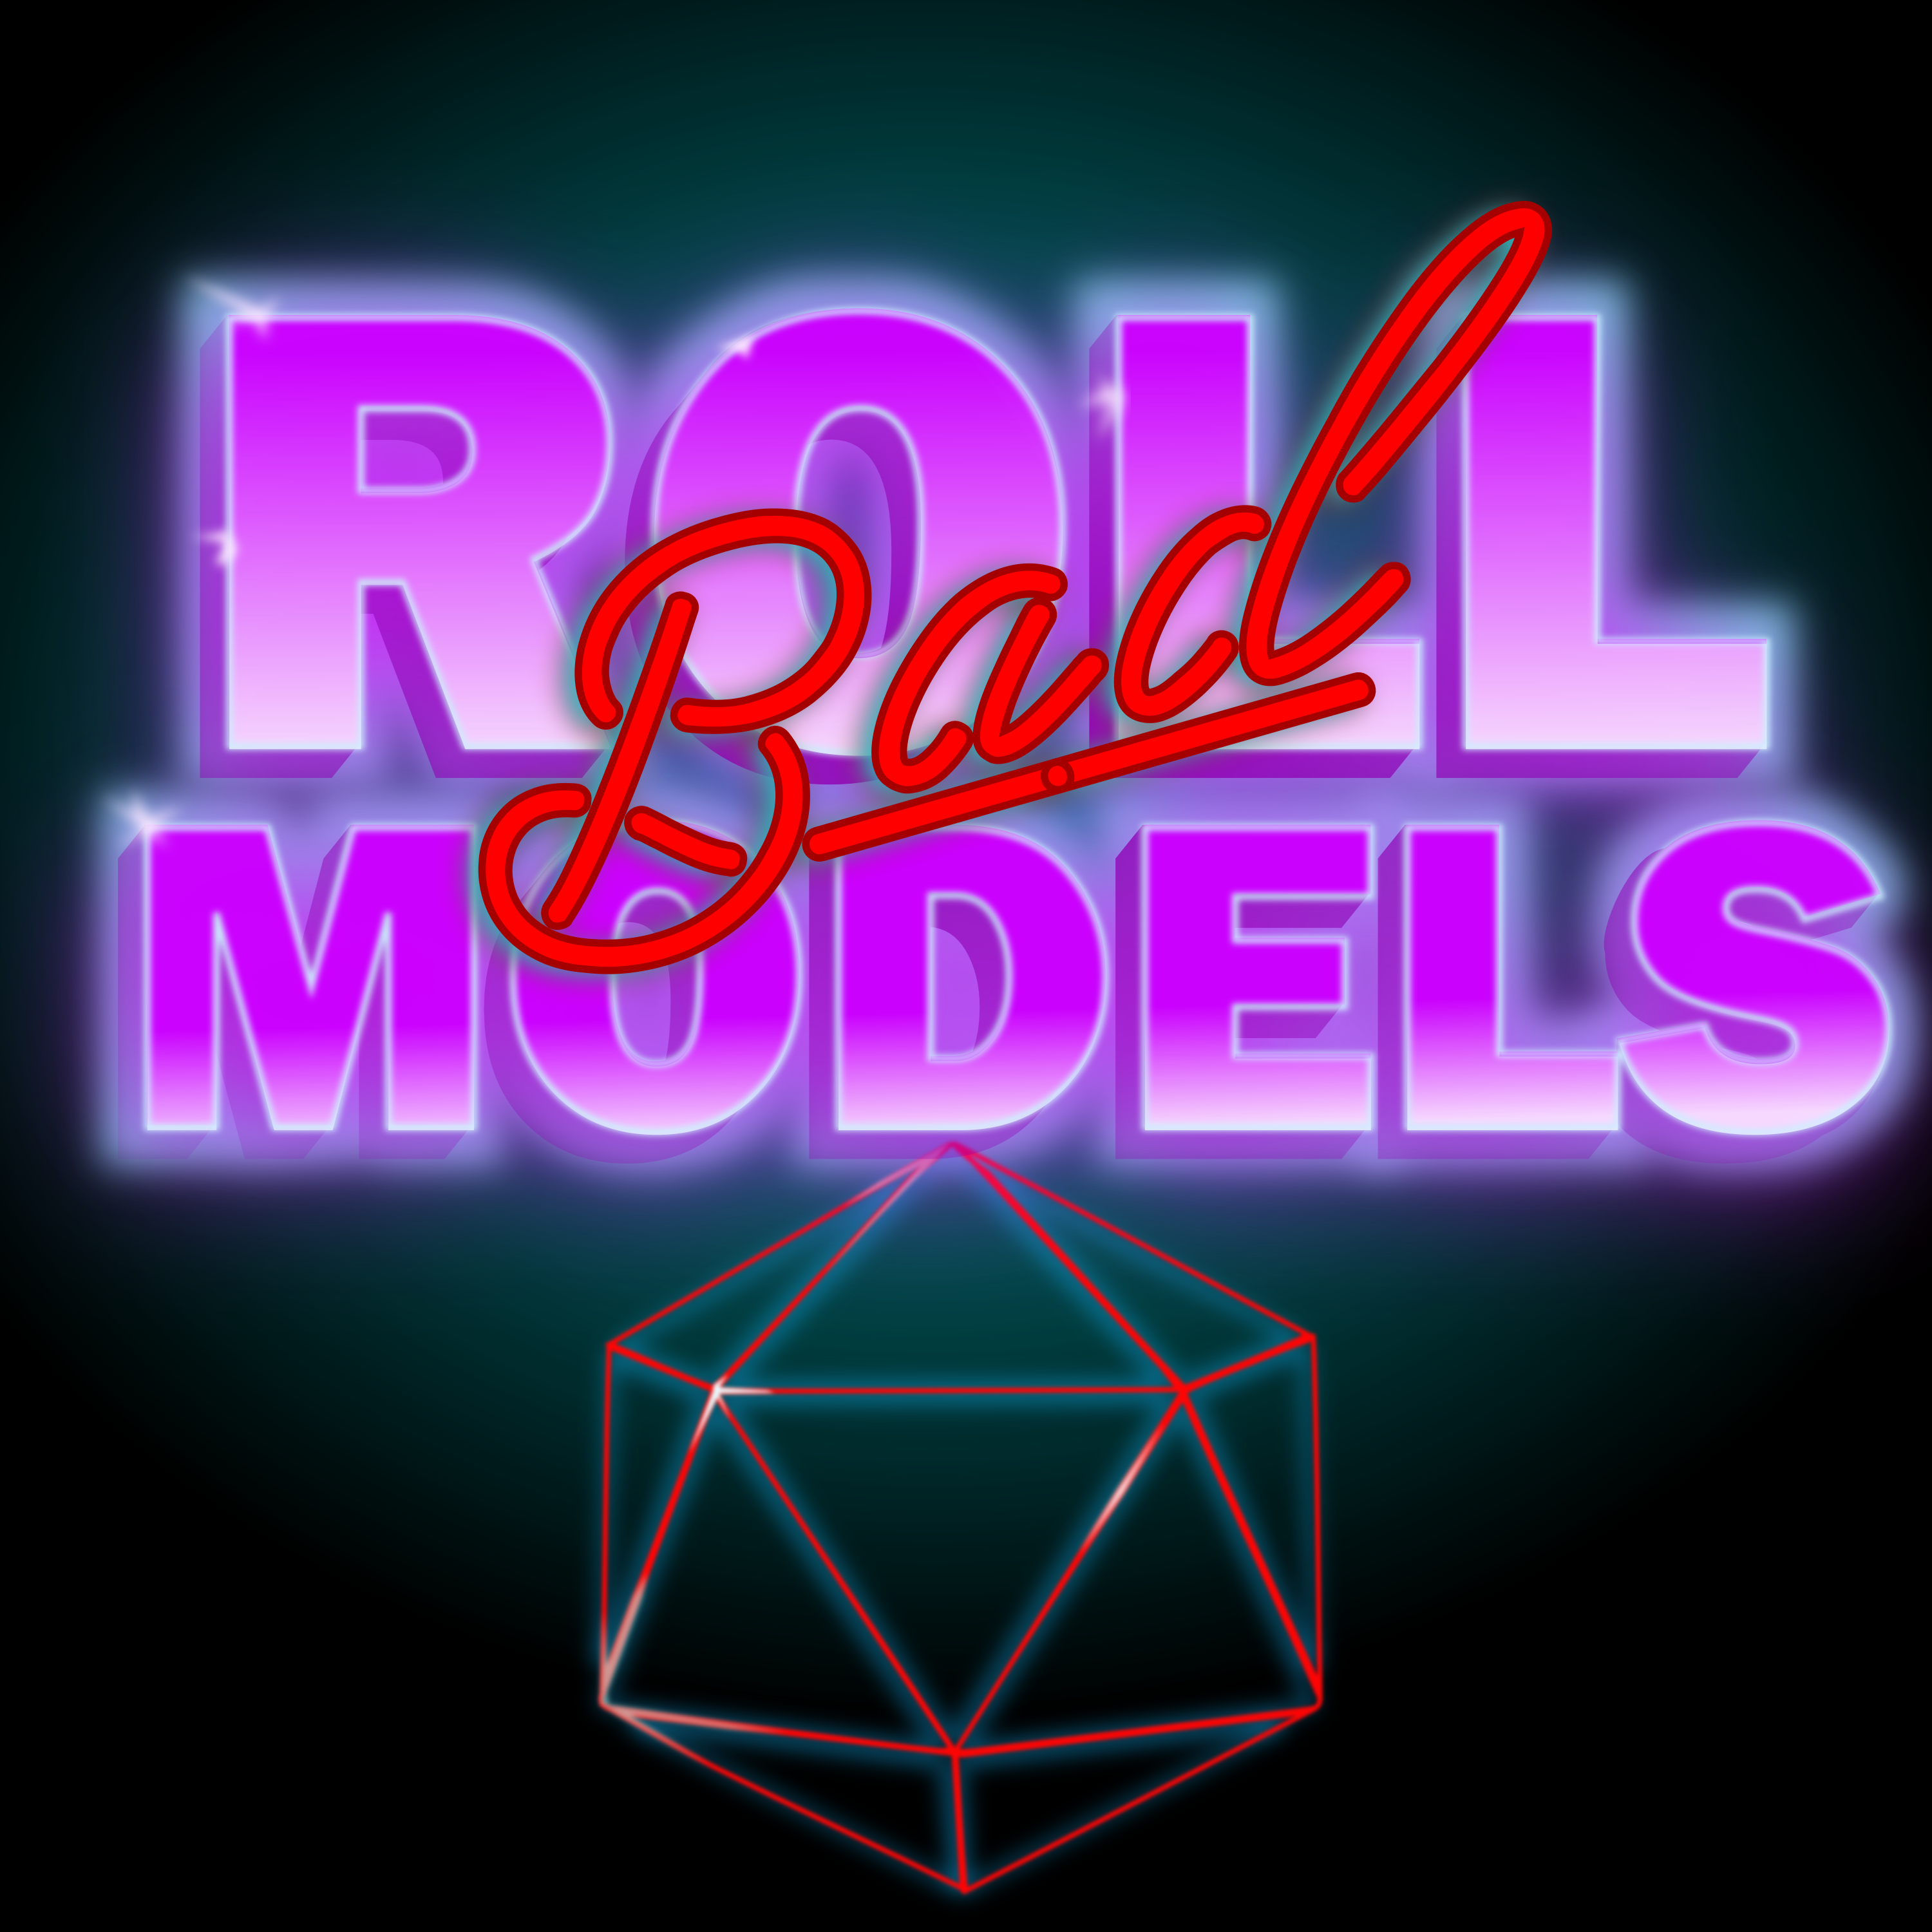 Bad Roll Models - RPG Improv Comedy